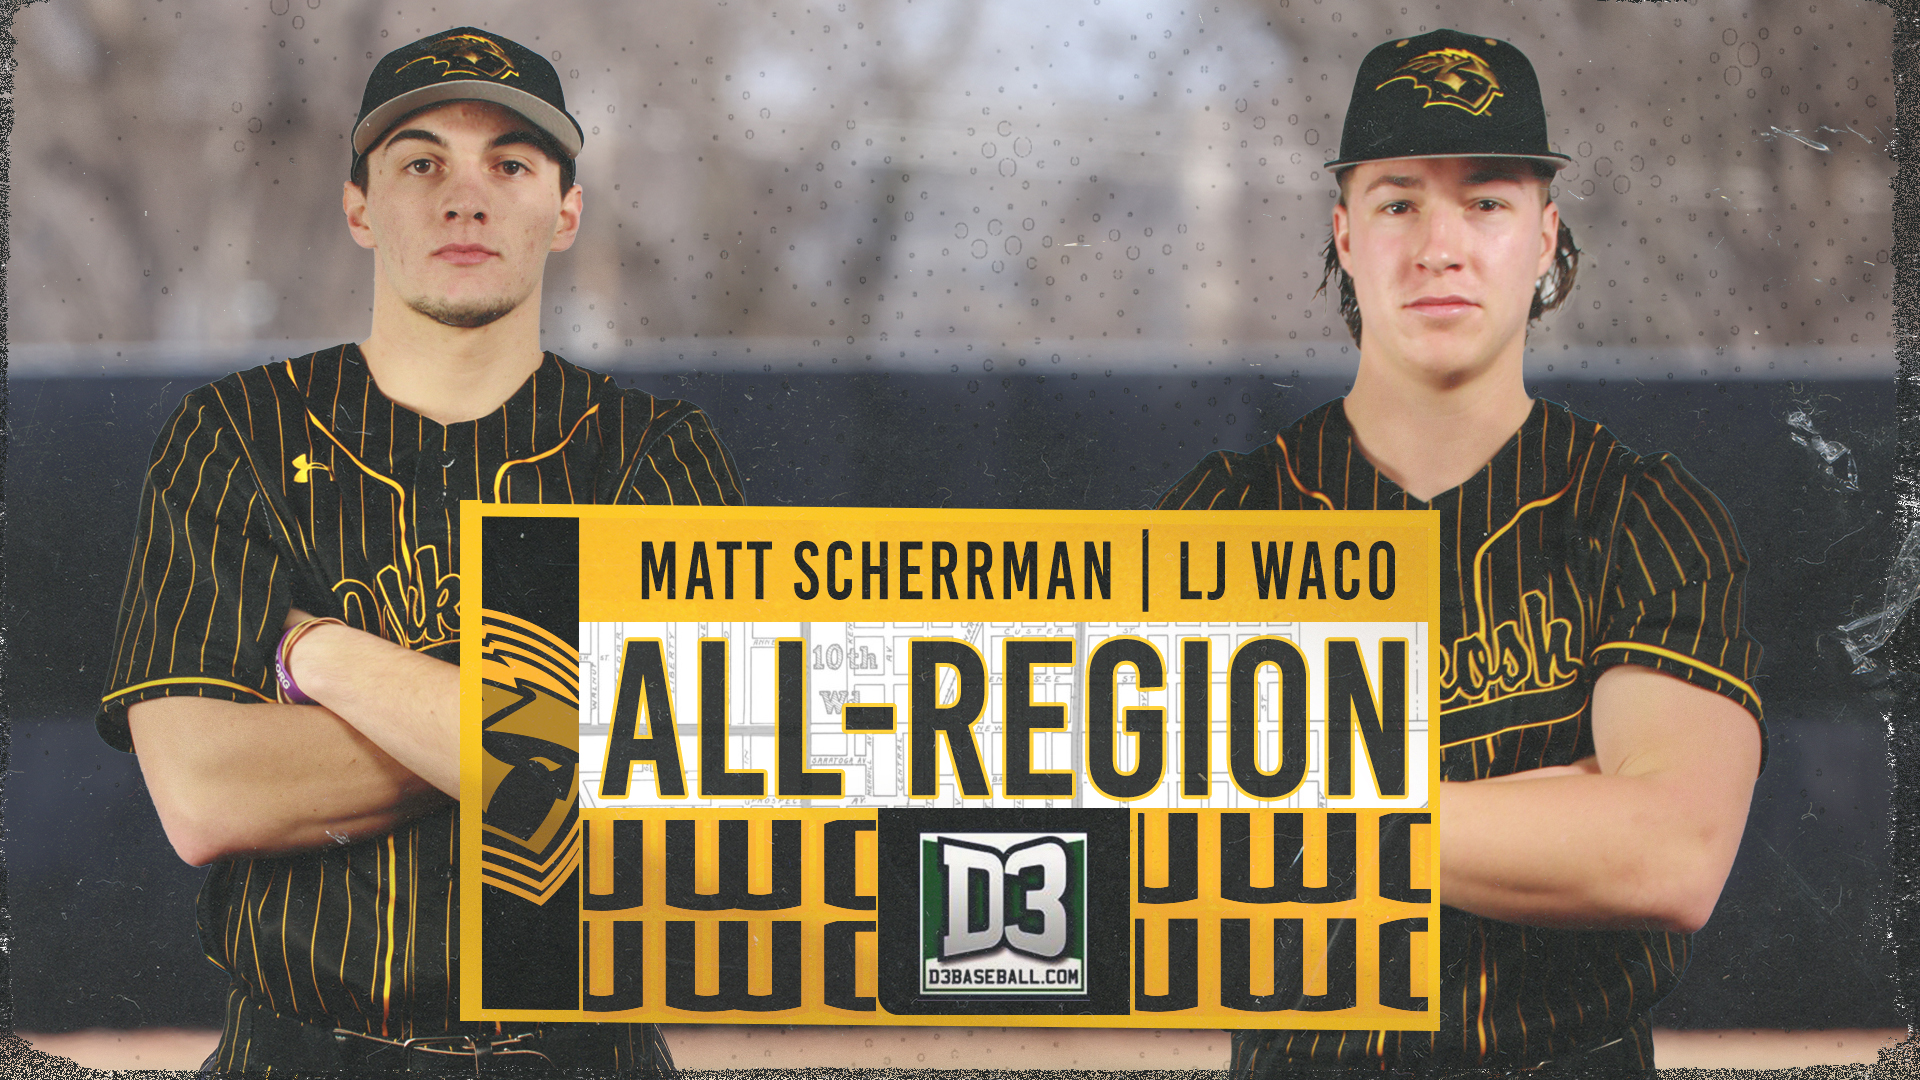 Matt Scherrman and LJ Waco, D3baseball.com All-Region